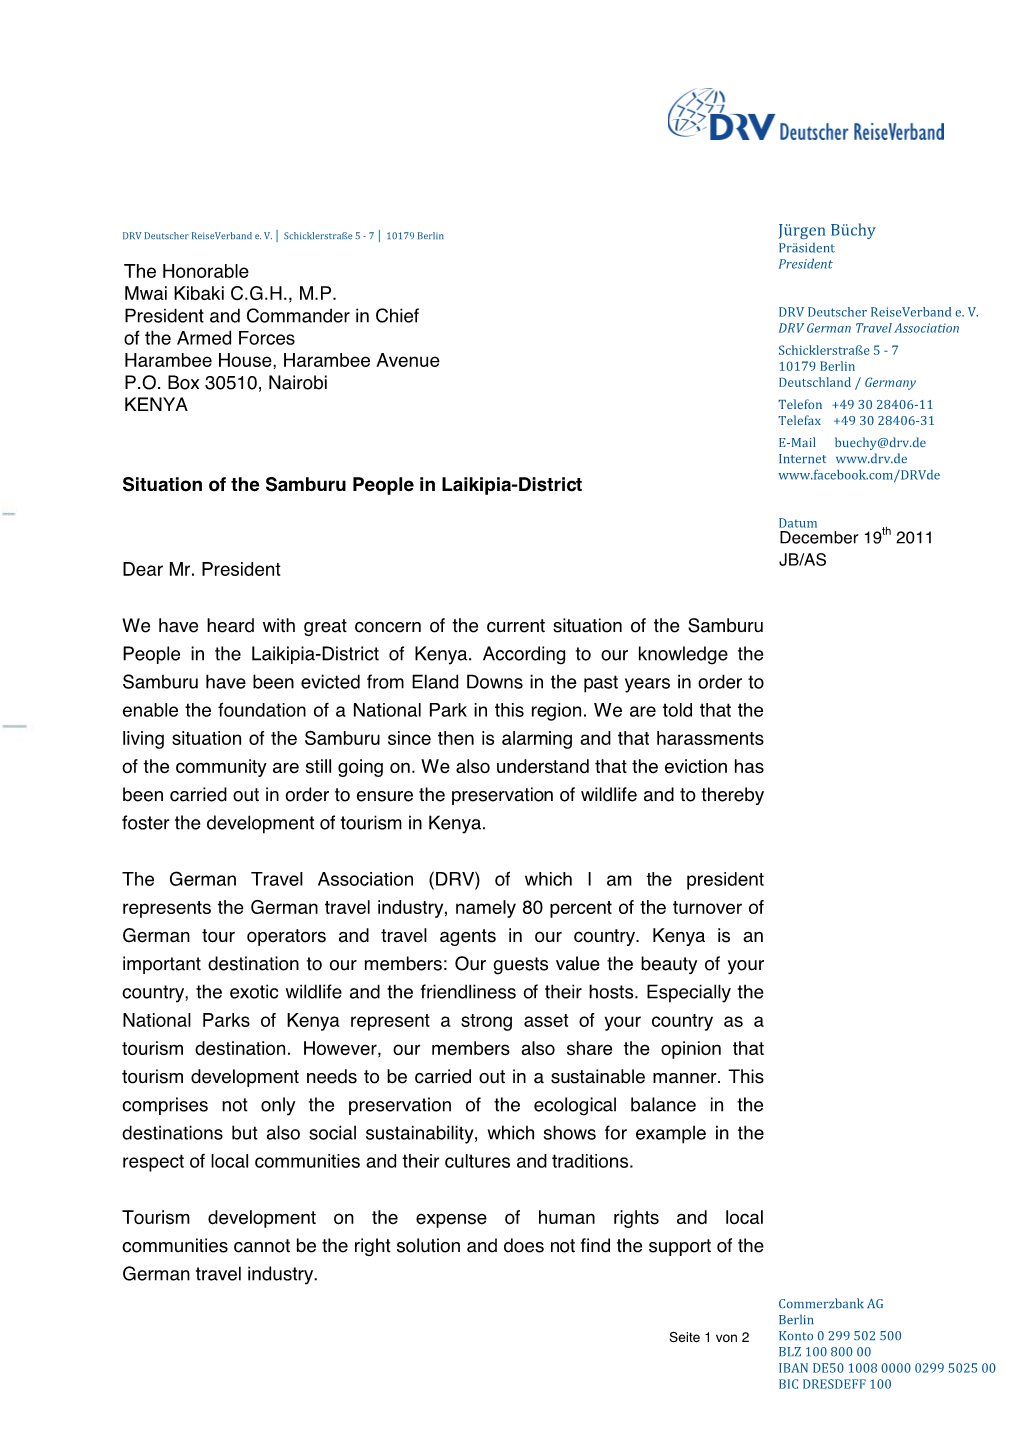 Letter to President Kibaki by DRV